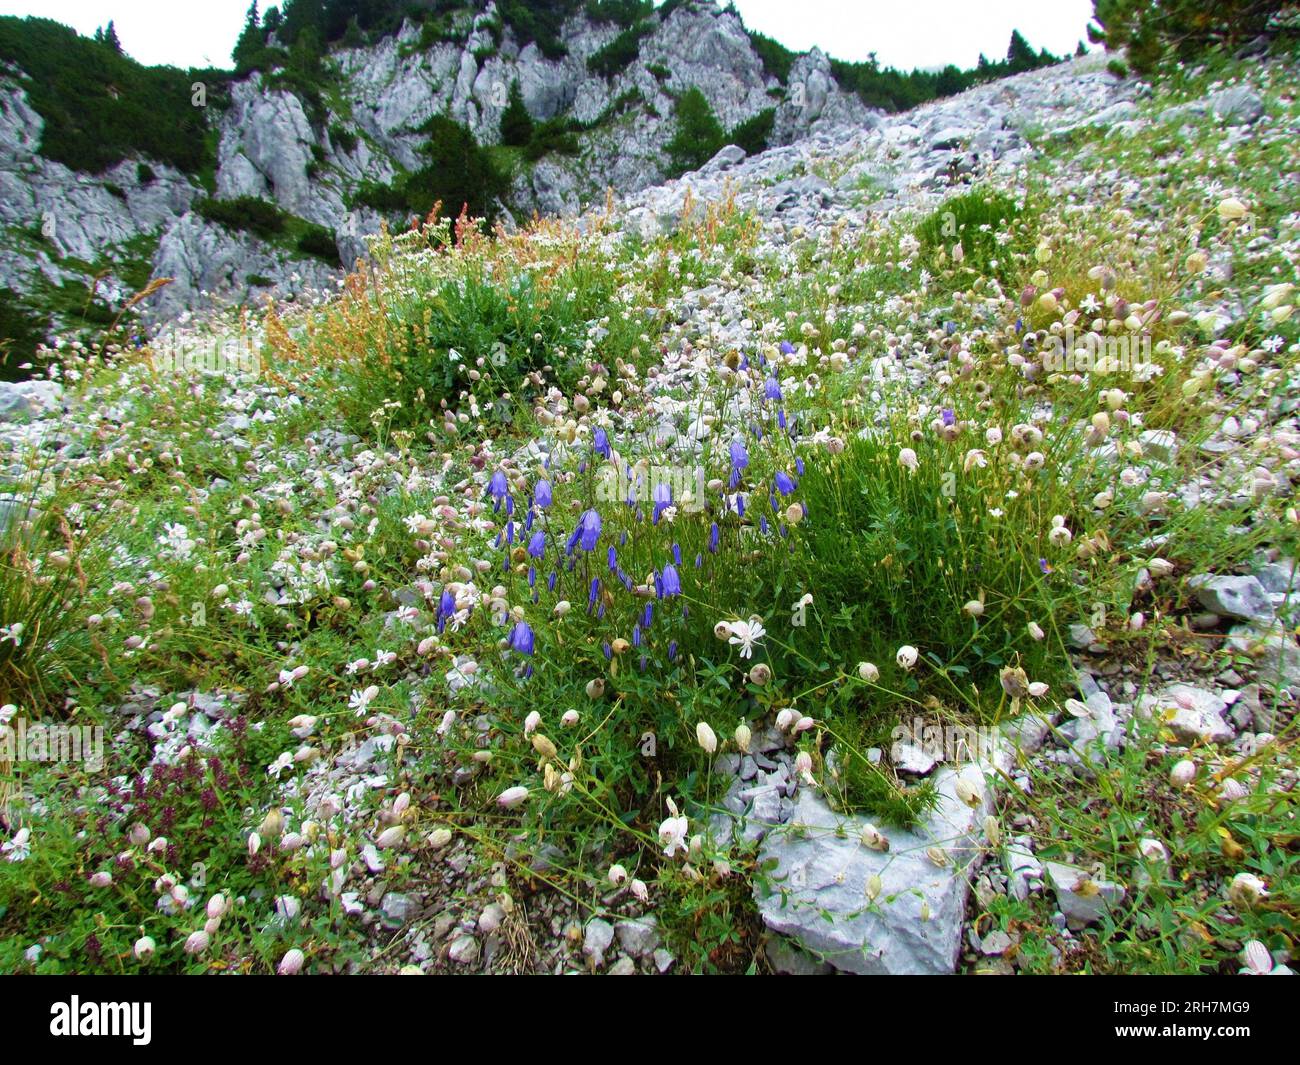 Alpine wild rock garden with blue earleaf bellflower (Campanula cochleariifolia) and white bladder campion (Silene vulgaris) flowers Stock Photo